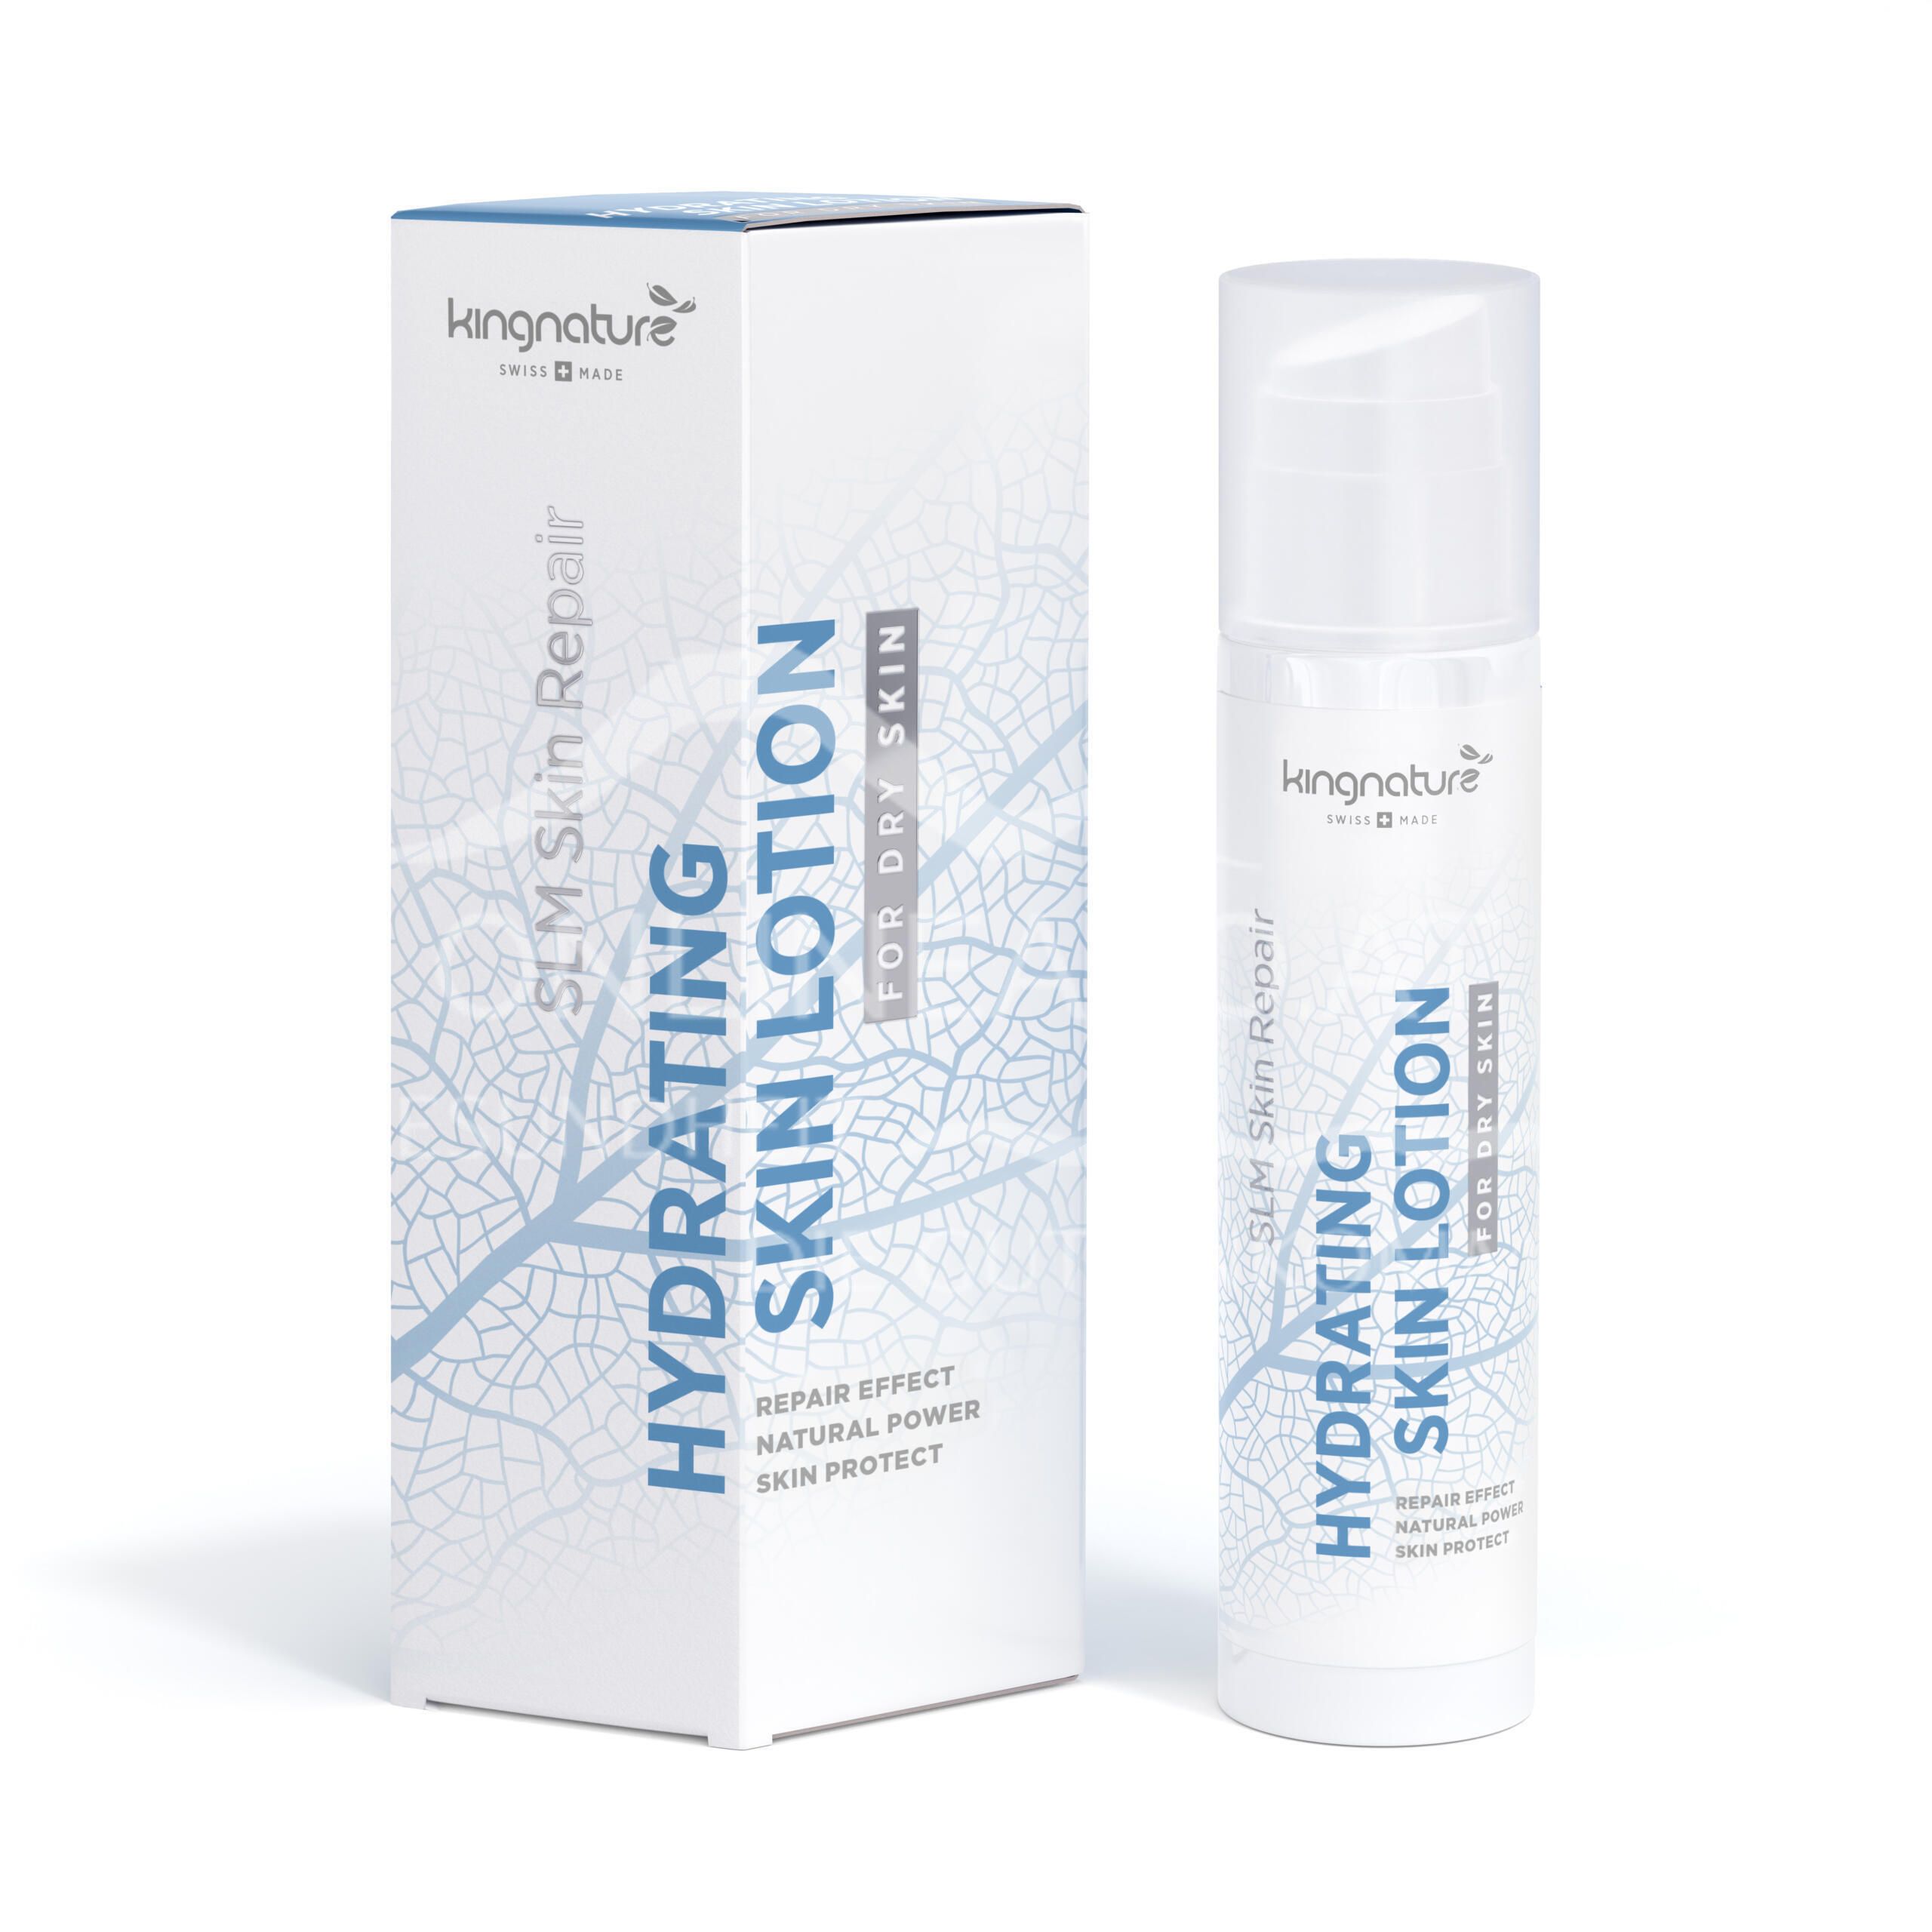 Kingnature Hydrating Skin Lotion